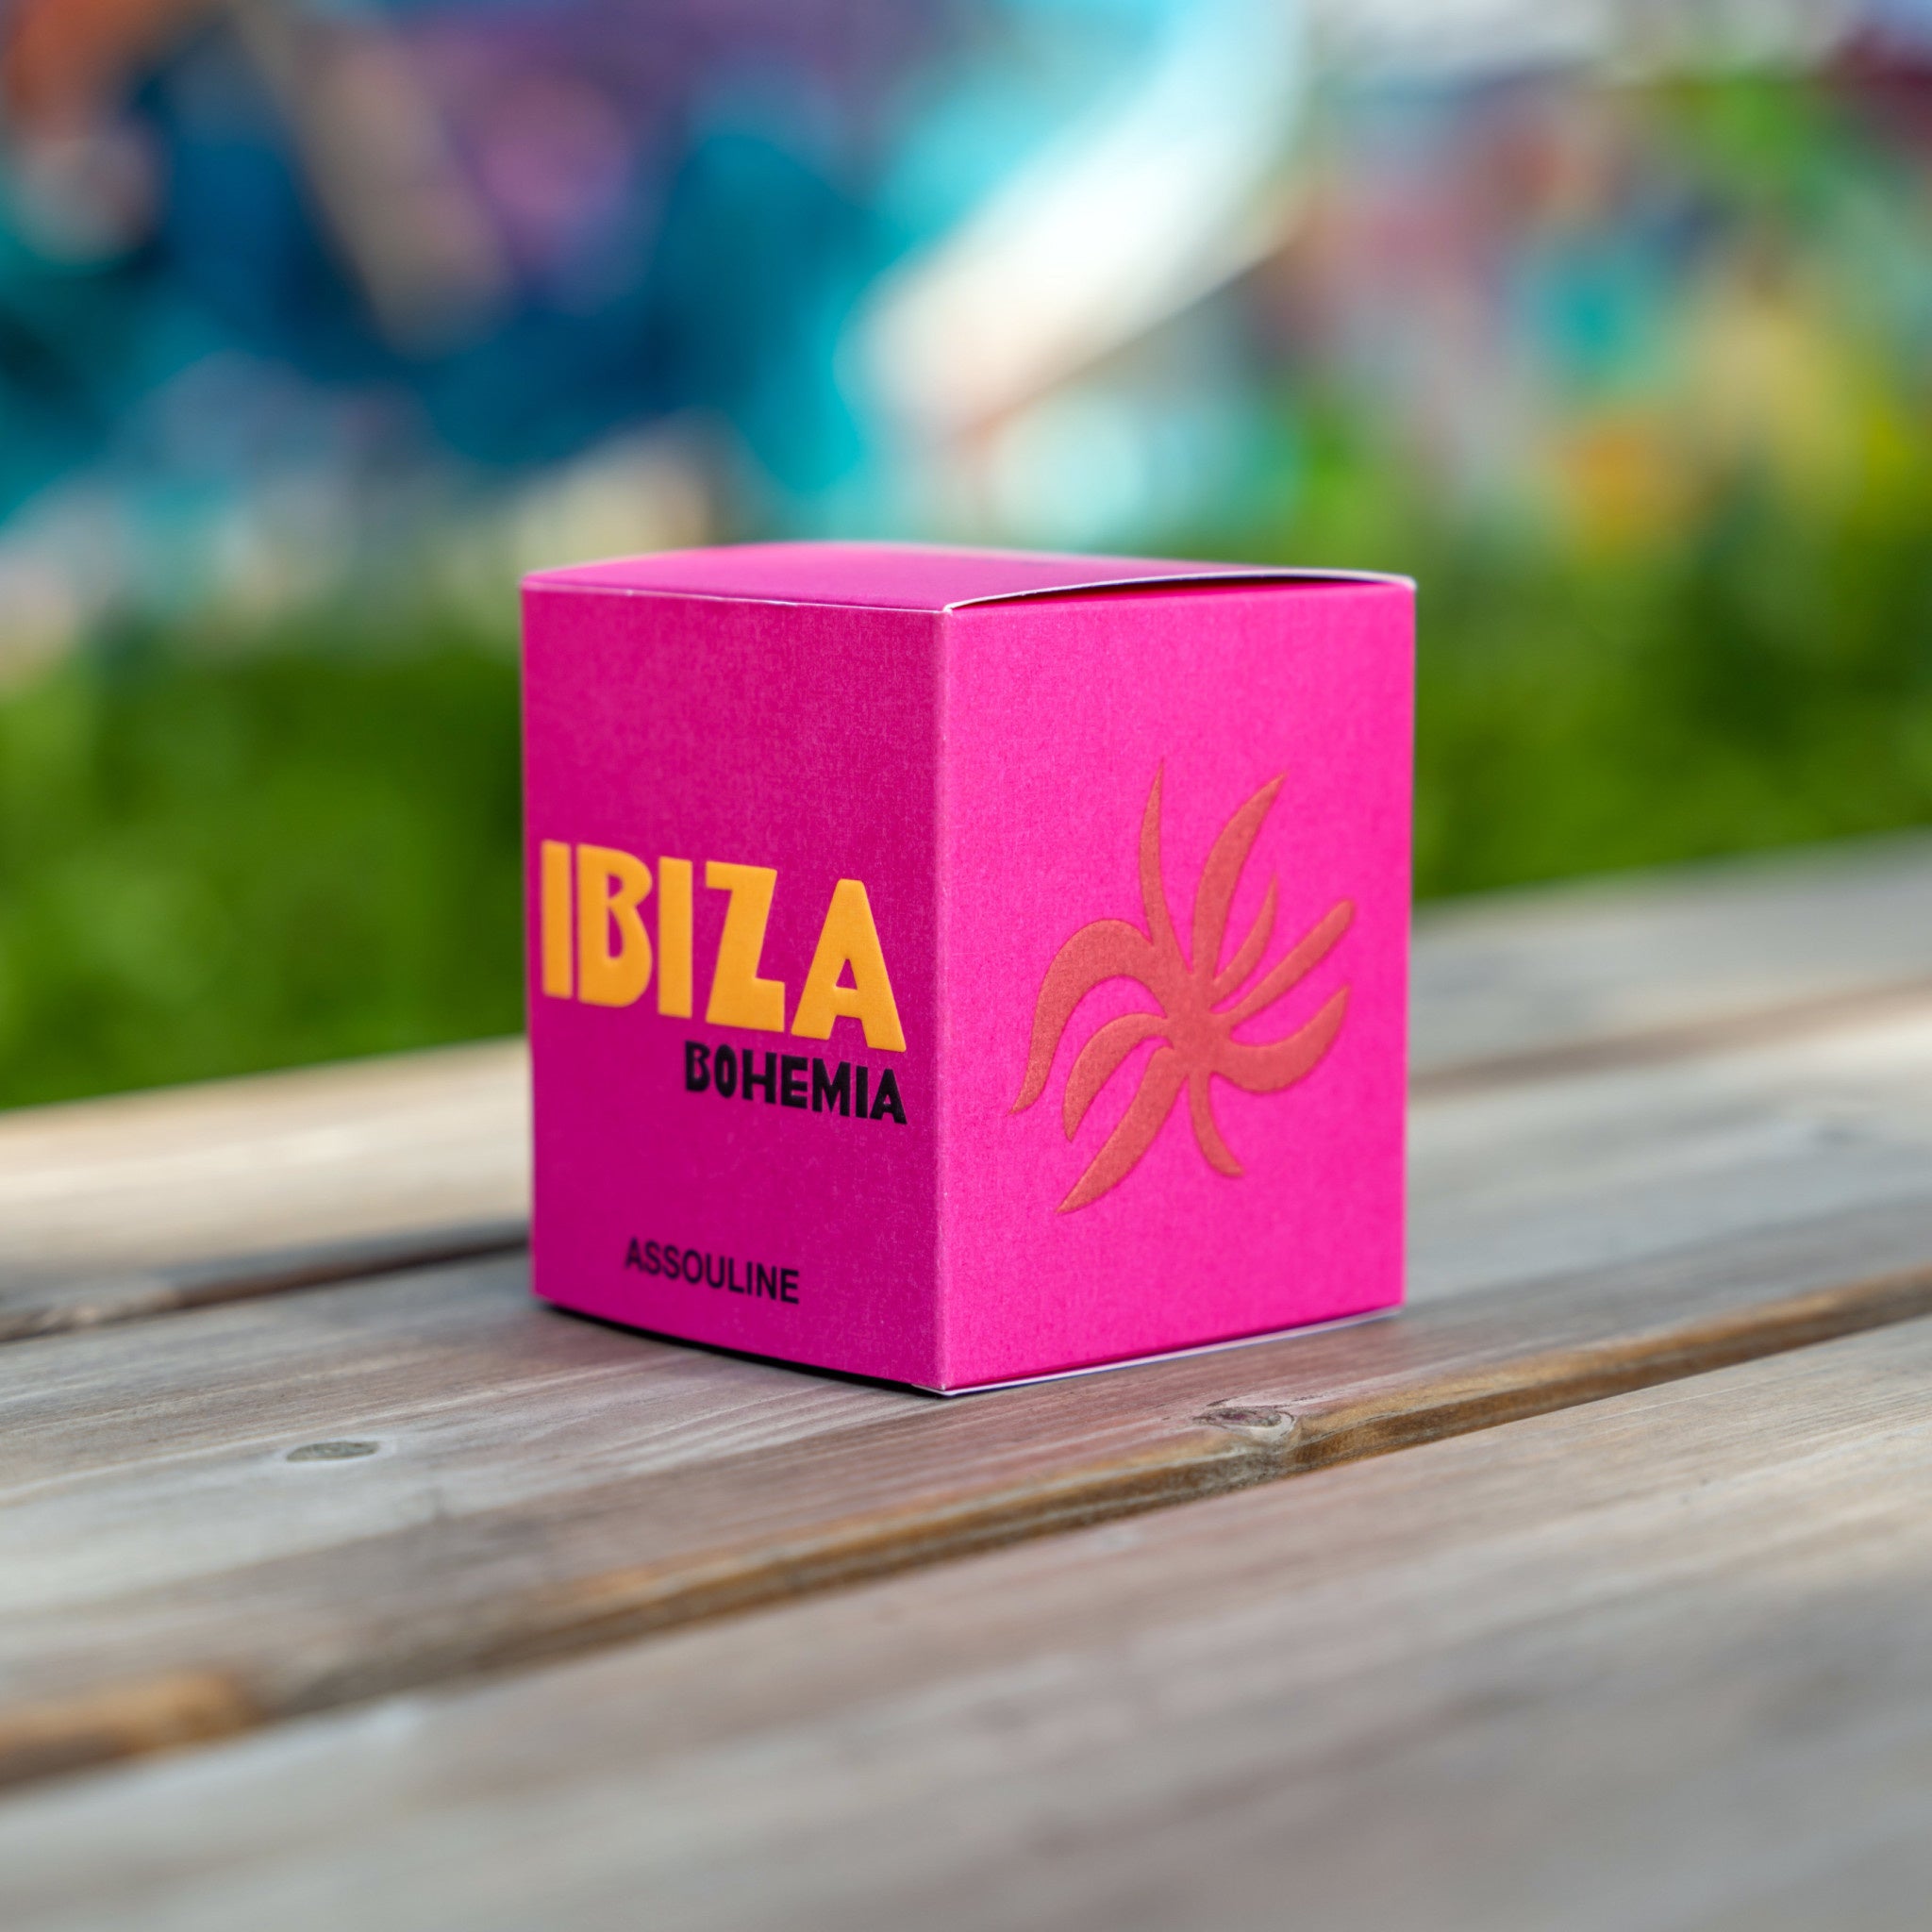 Ibiza Bohemia - Travel From Home Candle - Wynwood Walls Shop